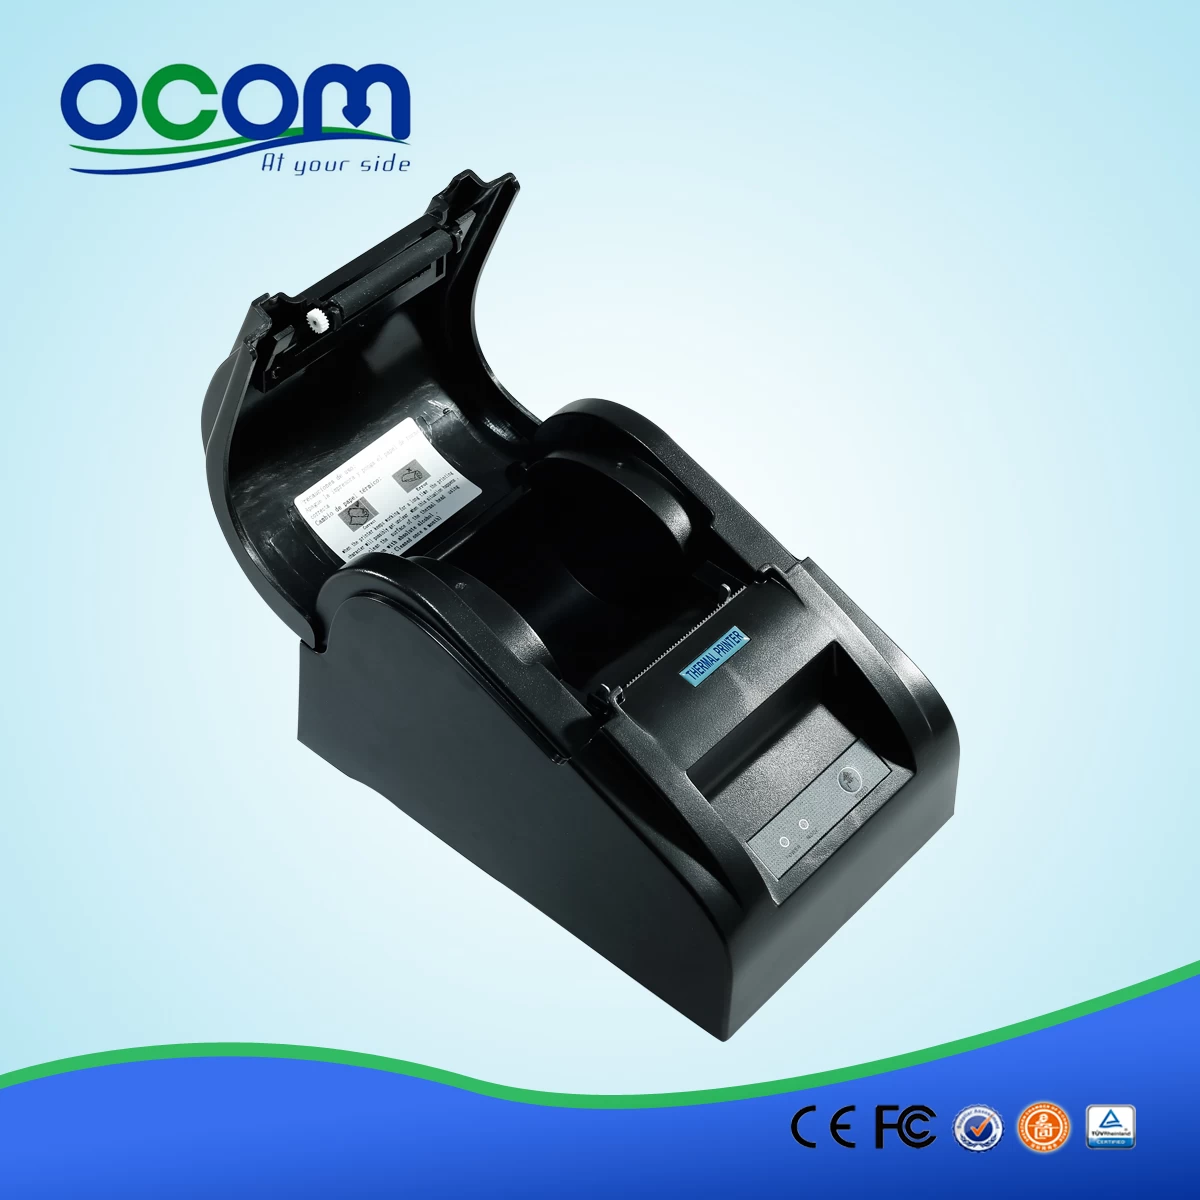 (OCPP-585) 58mm Desktop Bluetooth Thermal Receipt Printer